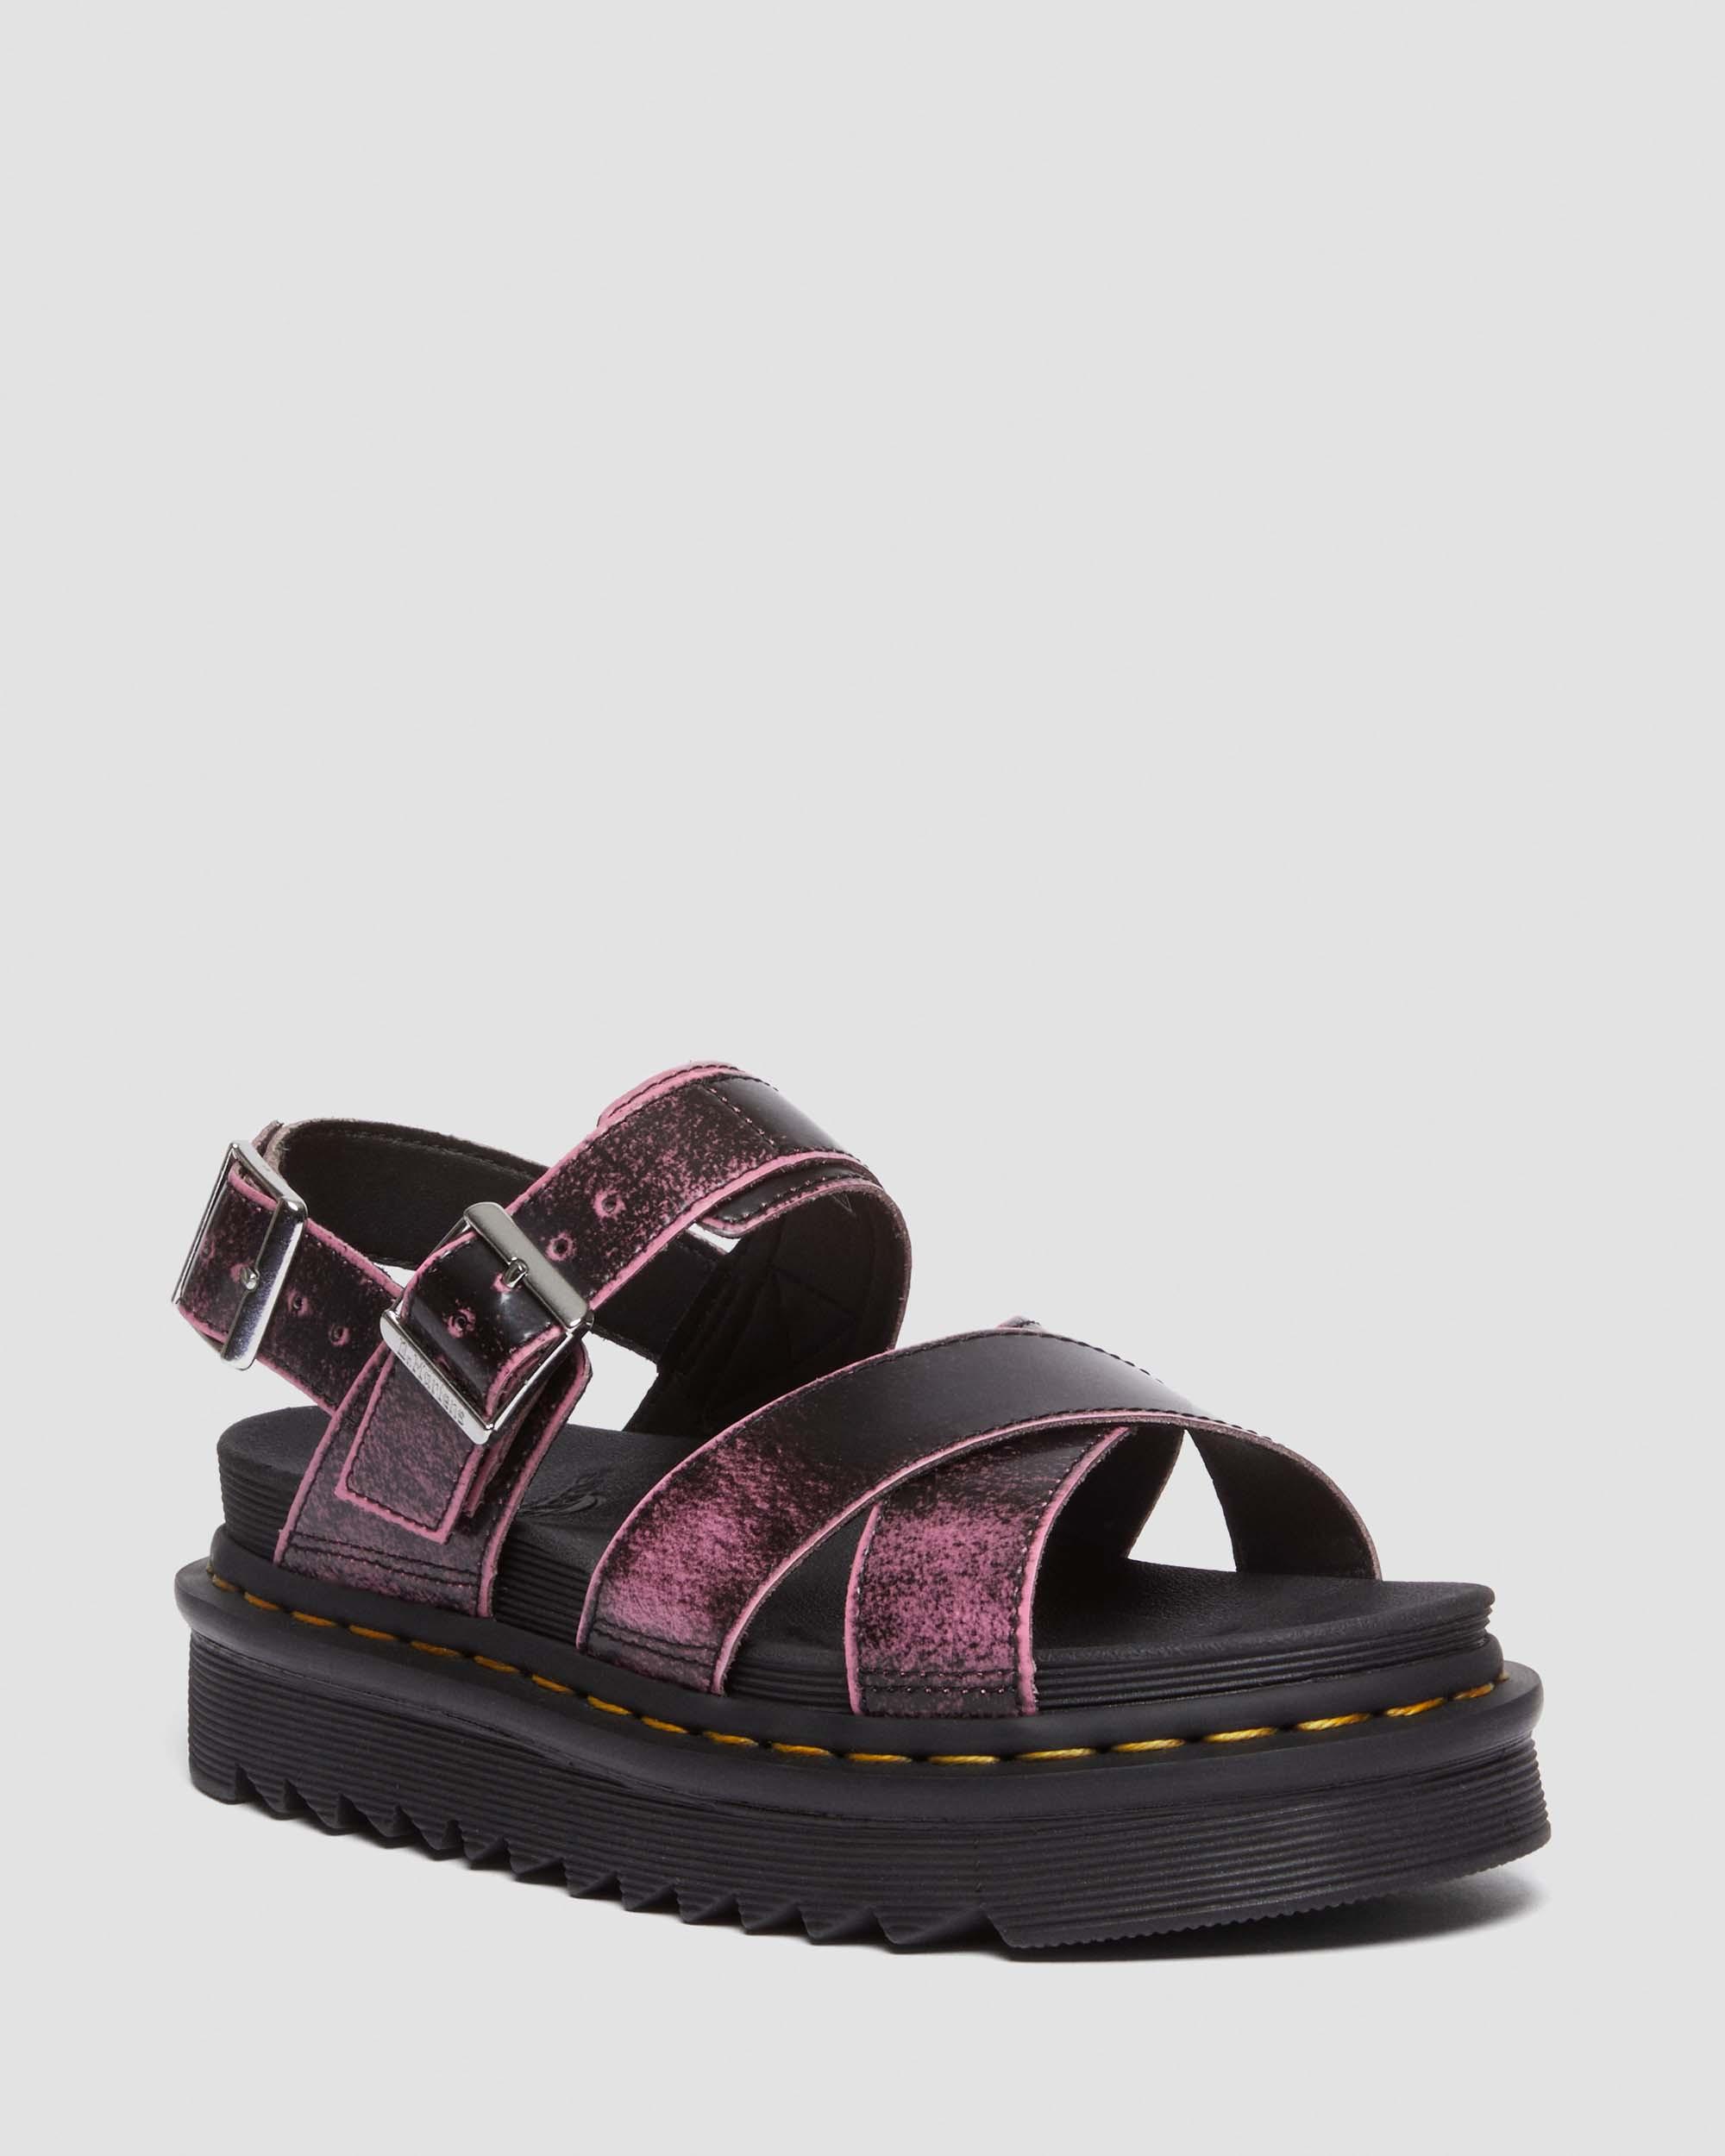 Voss II Distressed Leather Platform Sandals in Black+Fondant Pink